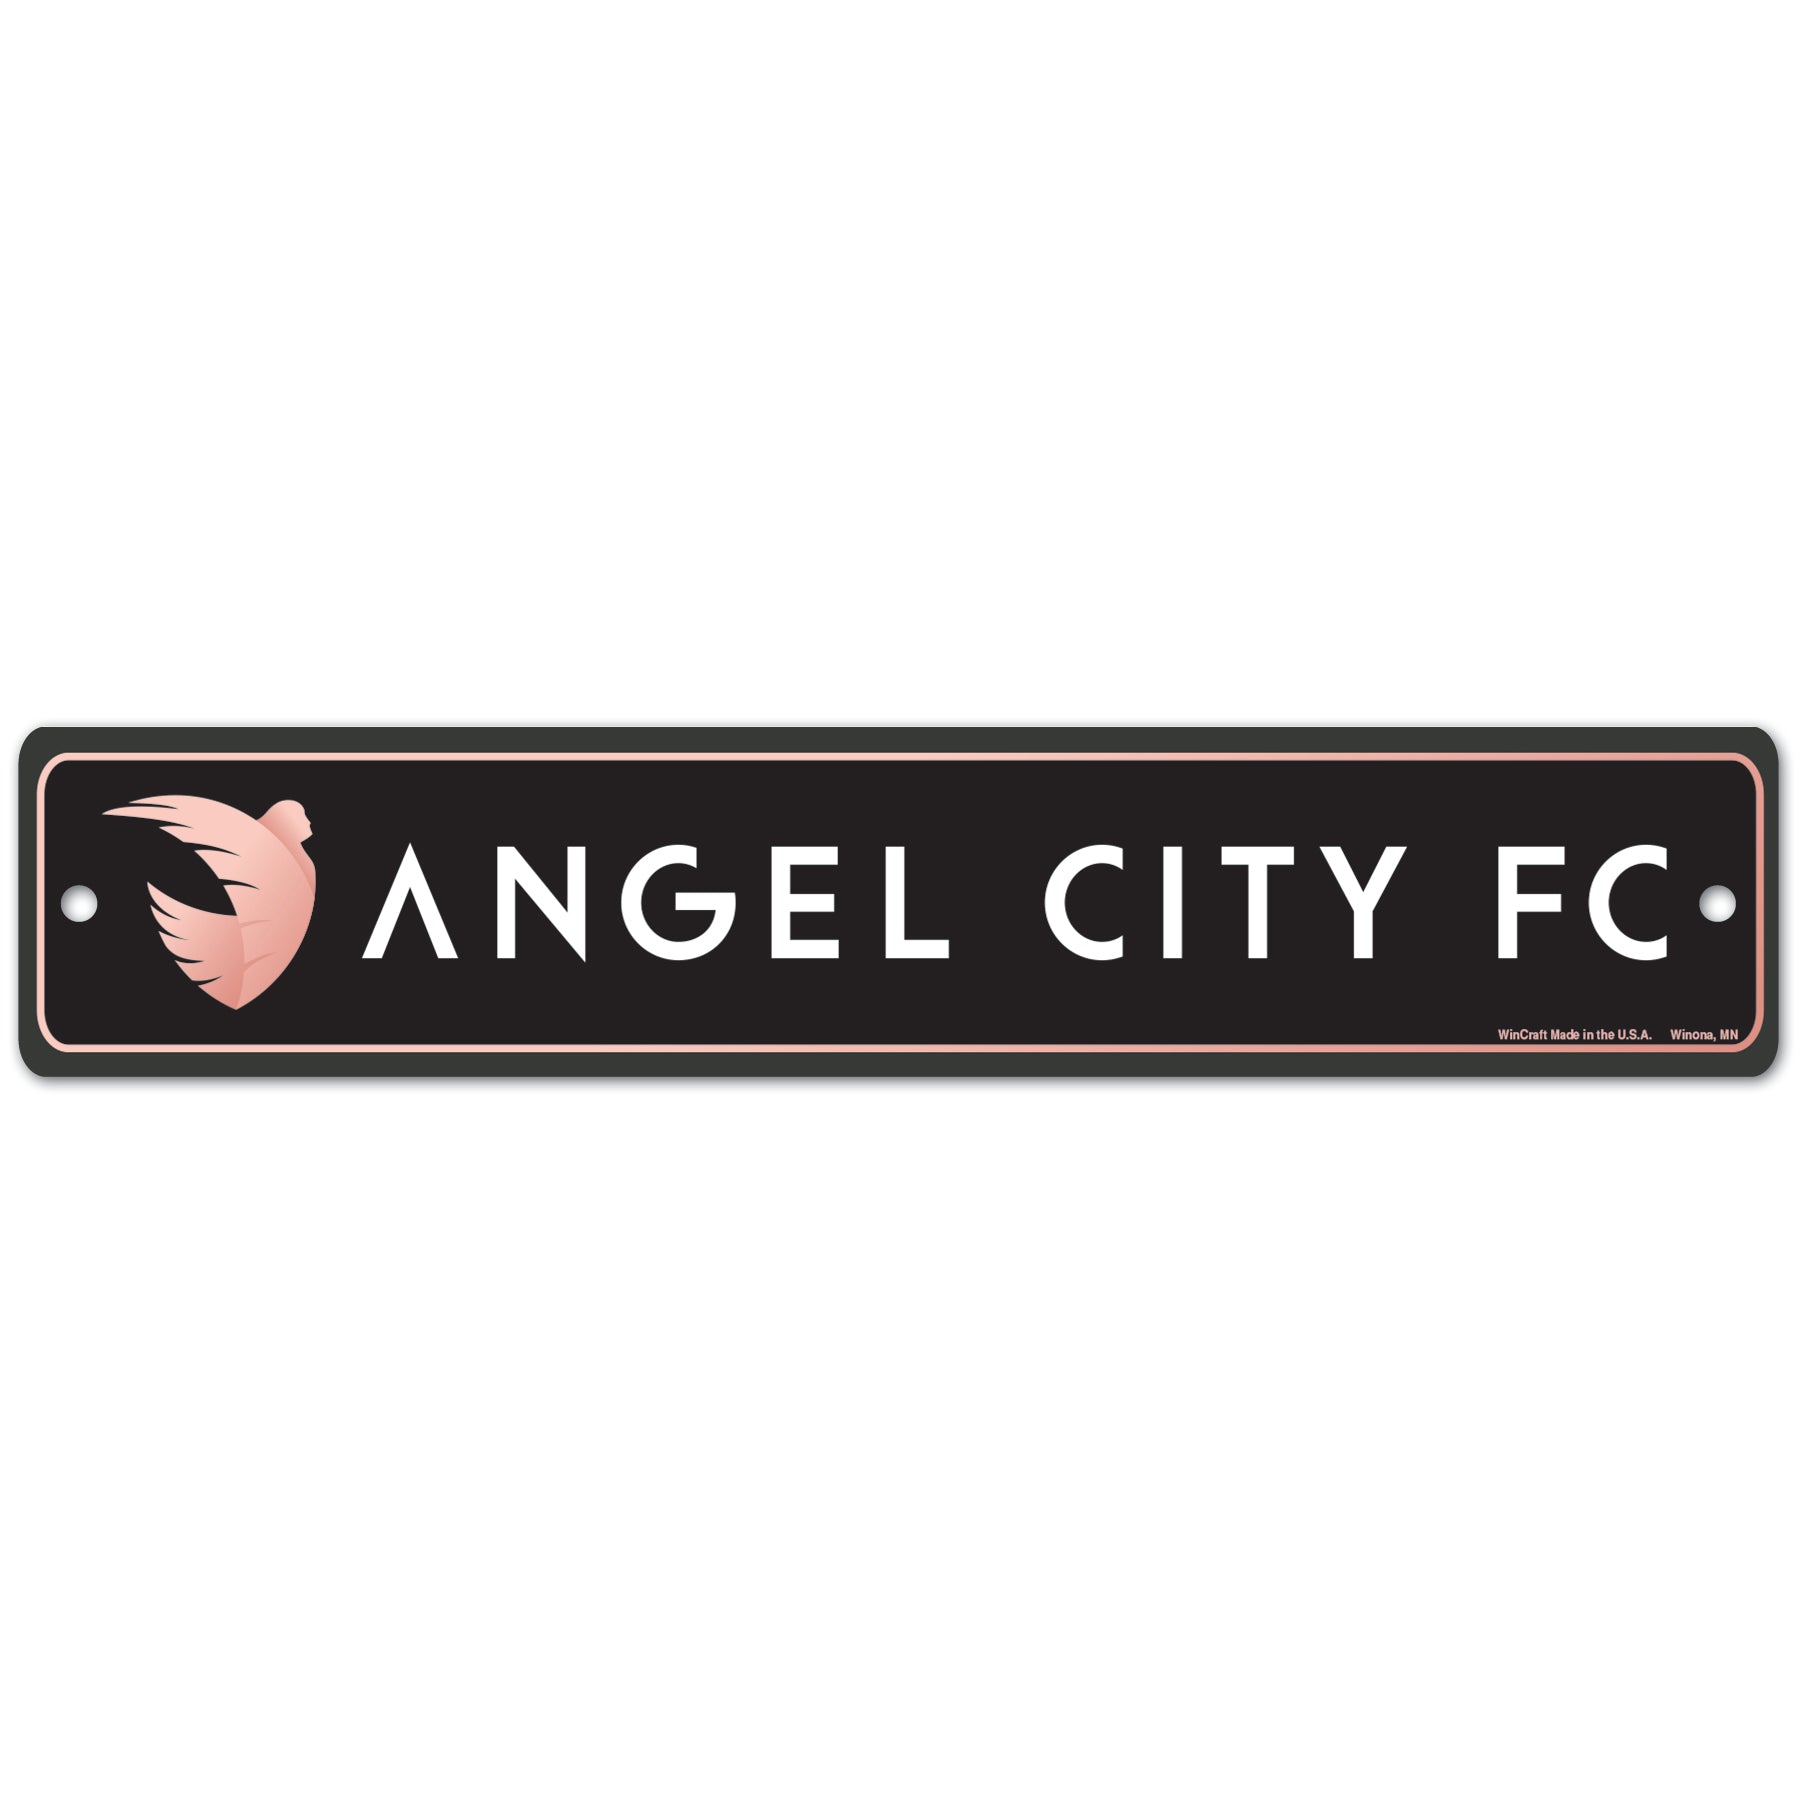 Angel City FC 3.75" x 19" Street Sign